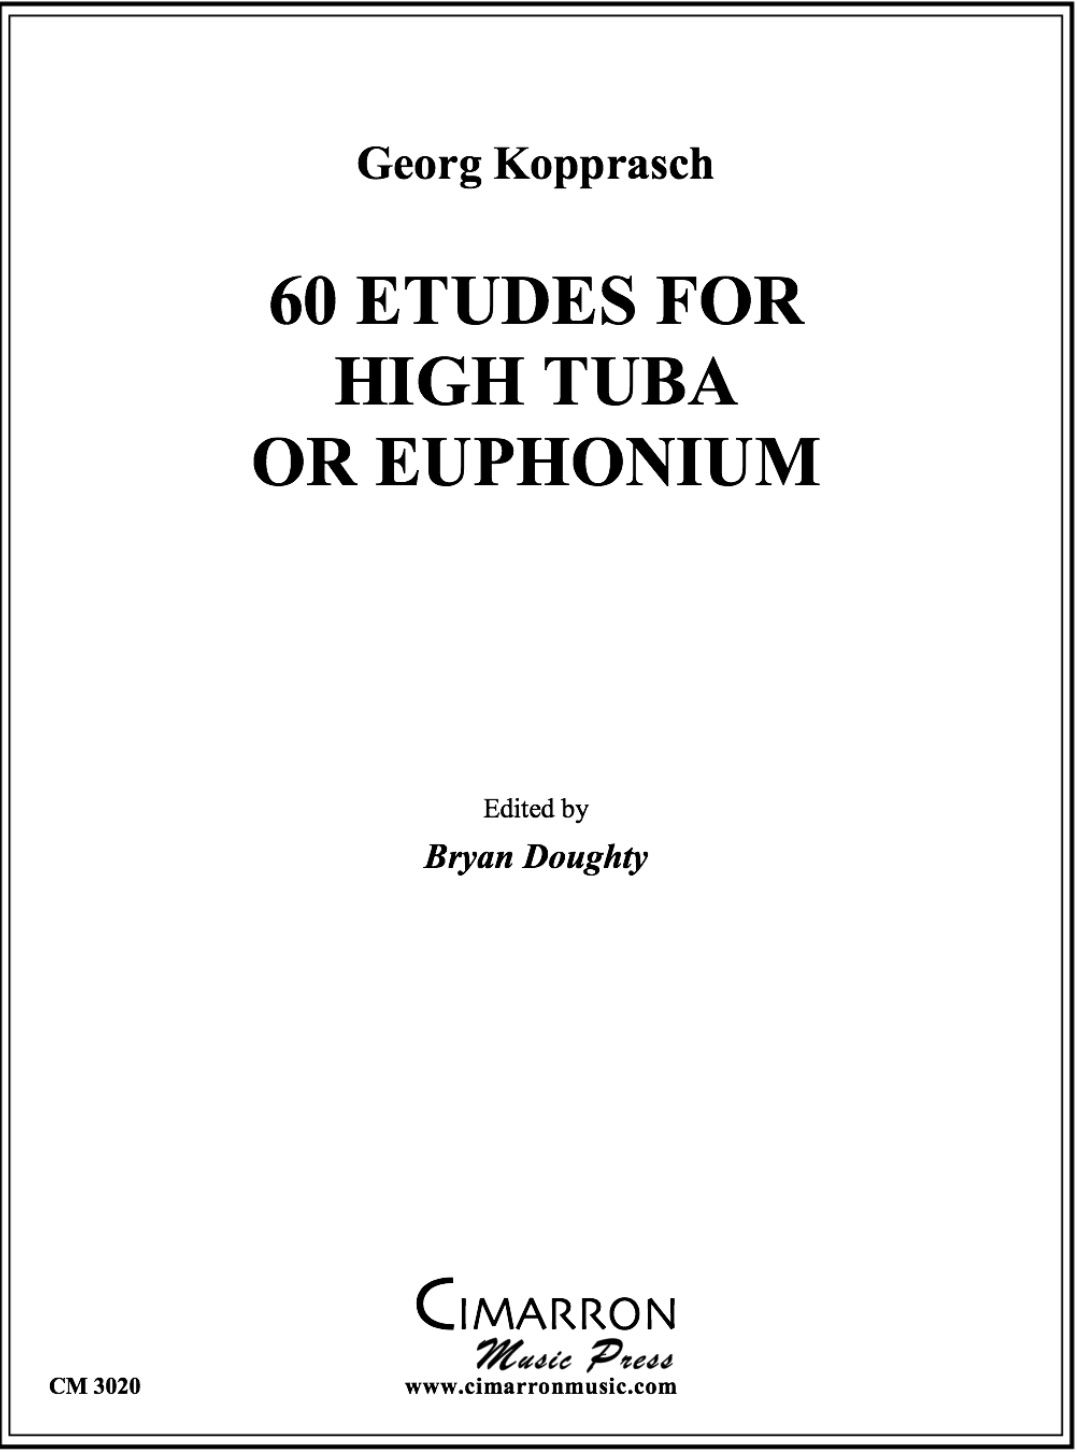 60 Etudes for High Tuba or Euphonium - Georg Kopprasch  ed. Bryan Doughty (bass clef only)